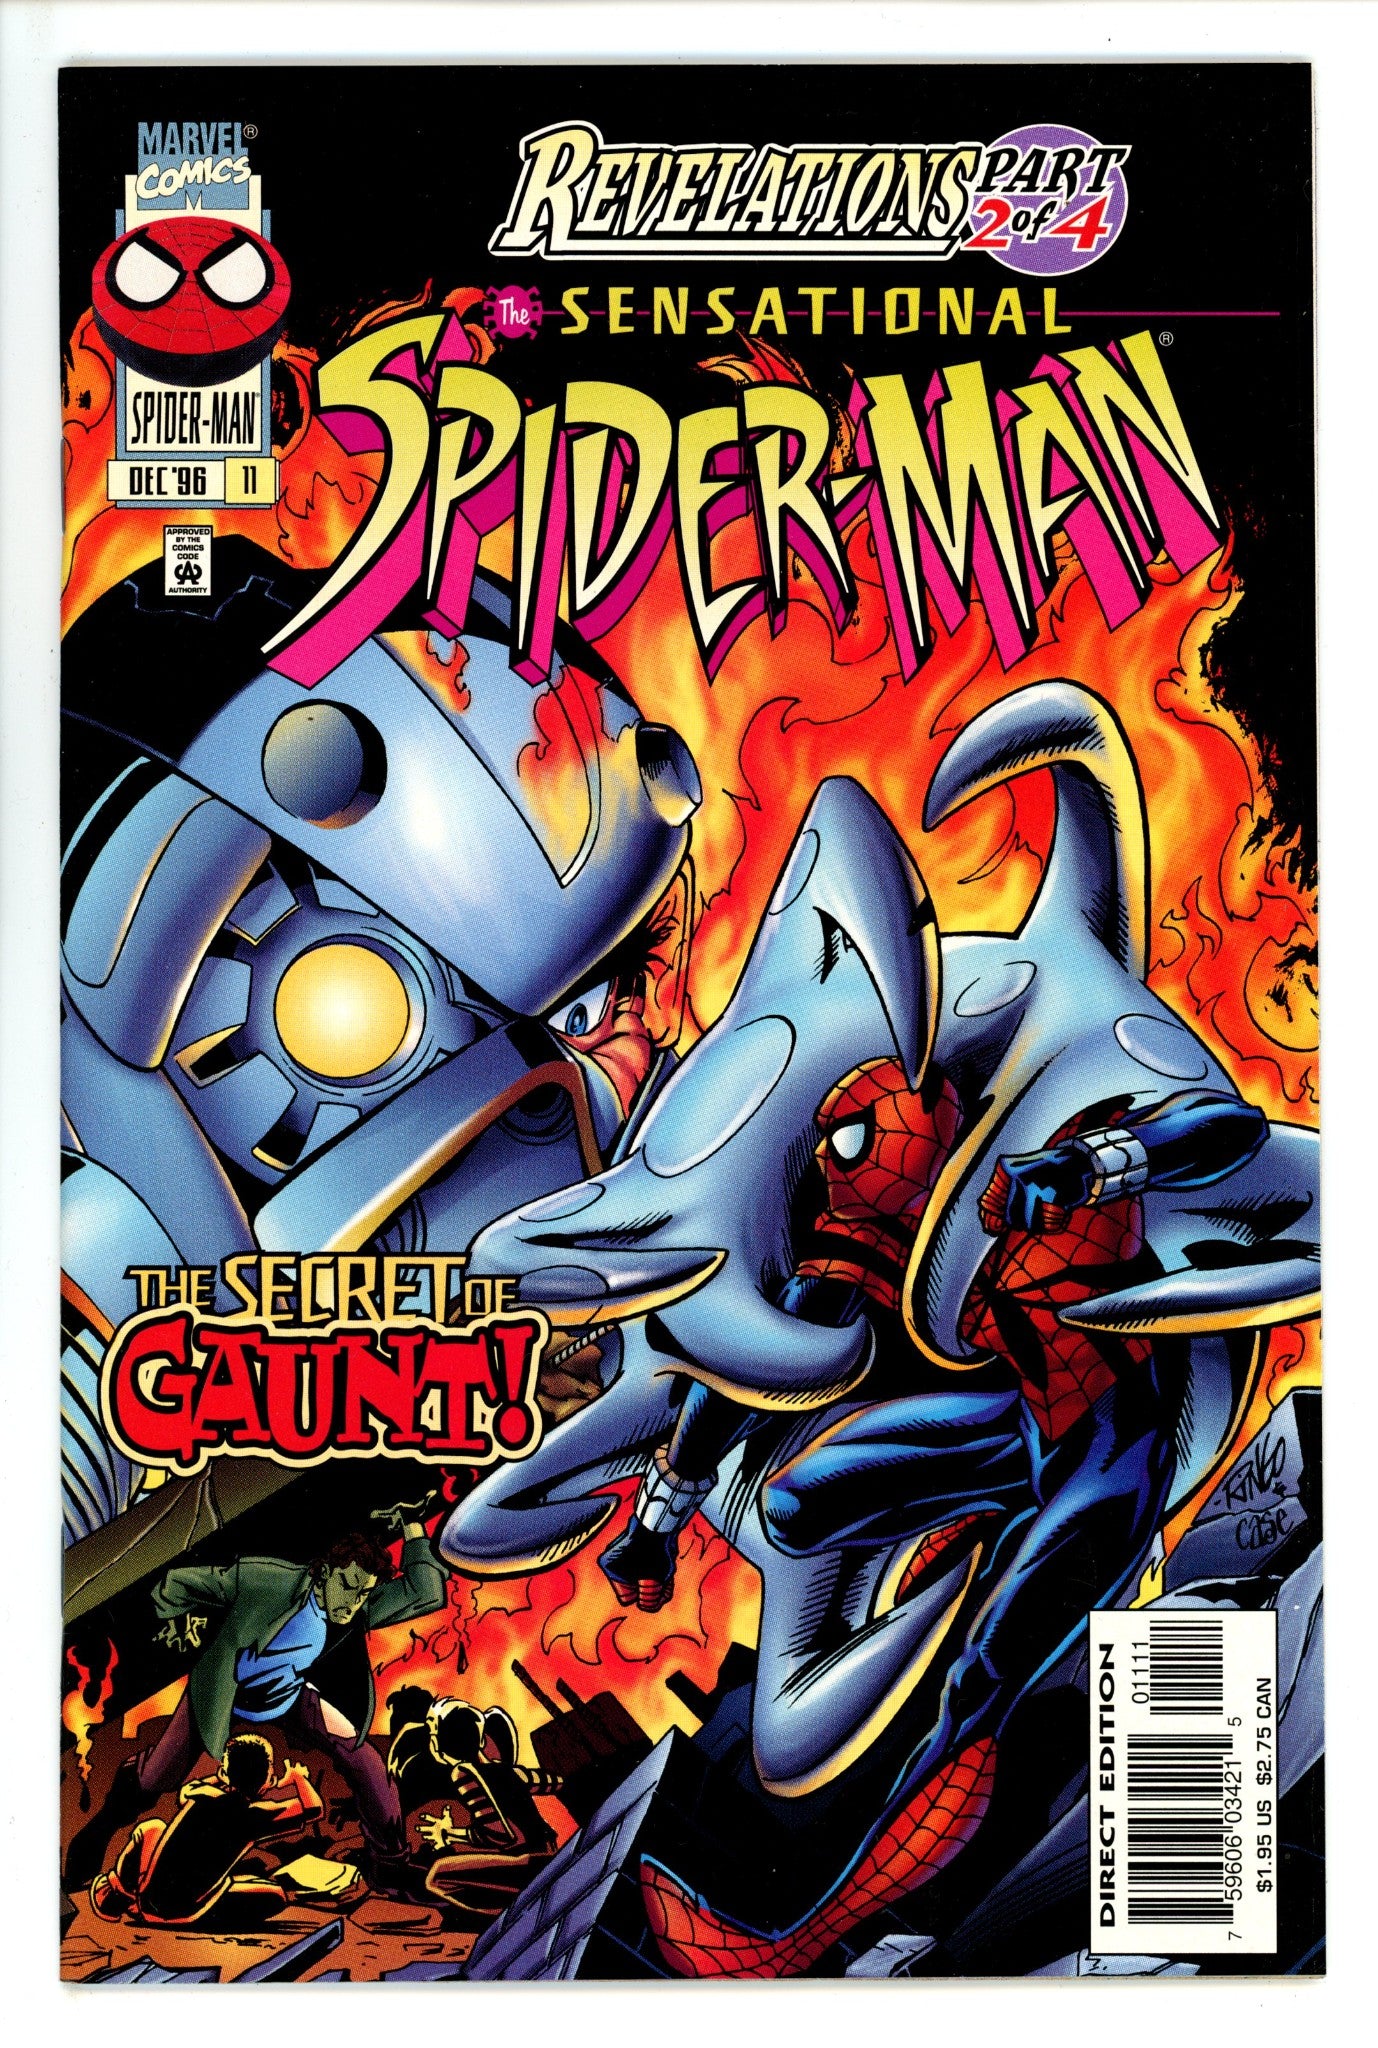 The Sensational Spider-Man Vol 1 11 (1996)